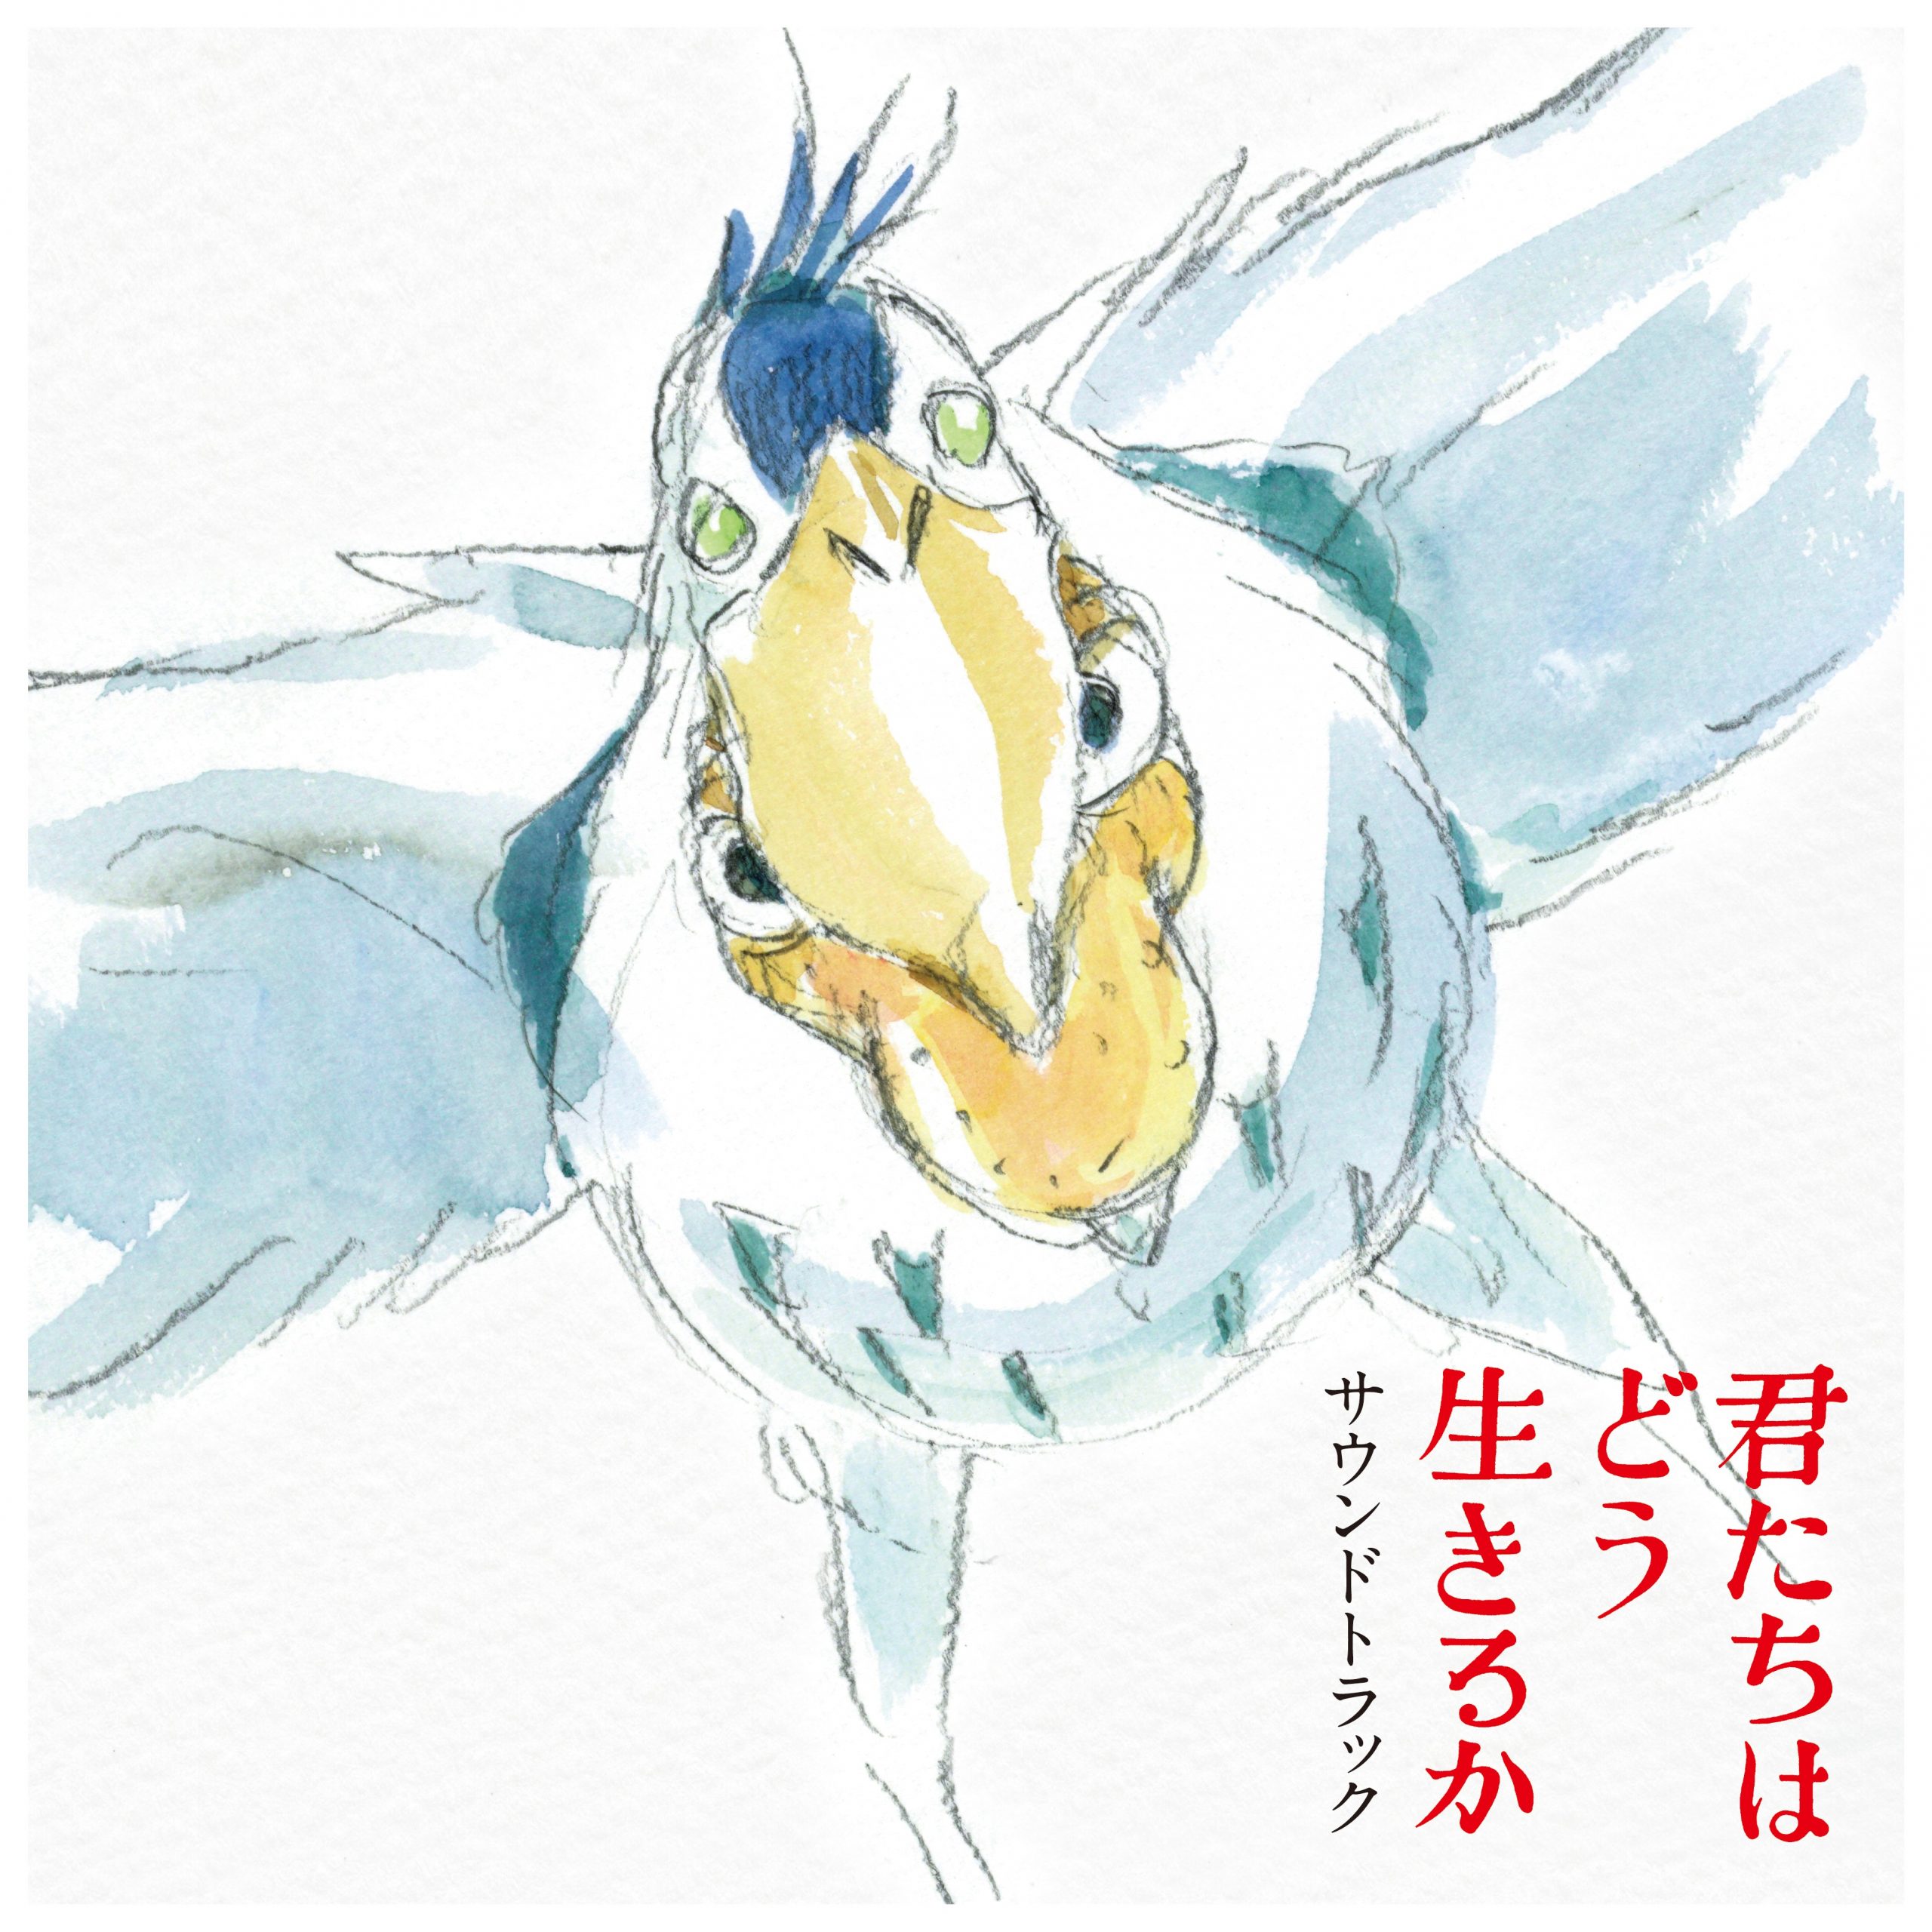 New Studio Ghibli Soundtrack  “The Boy and the Heron”